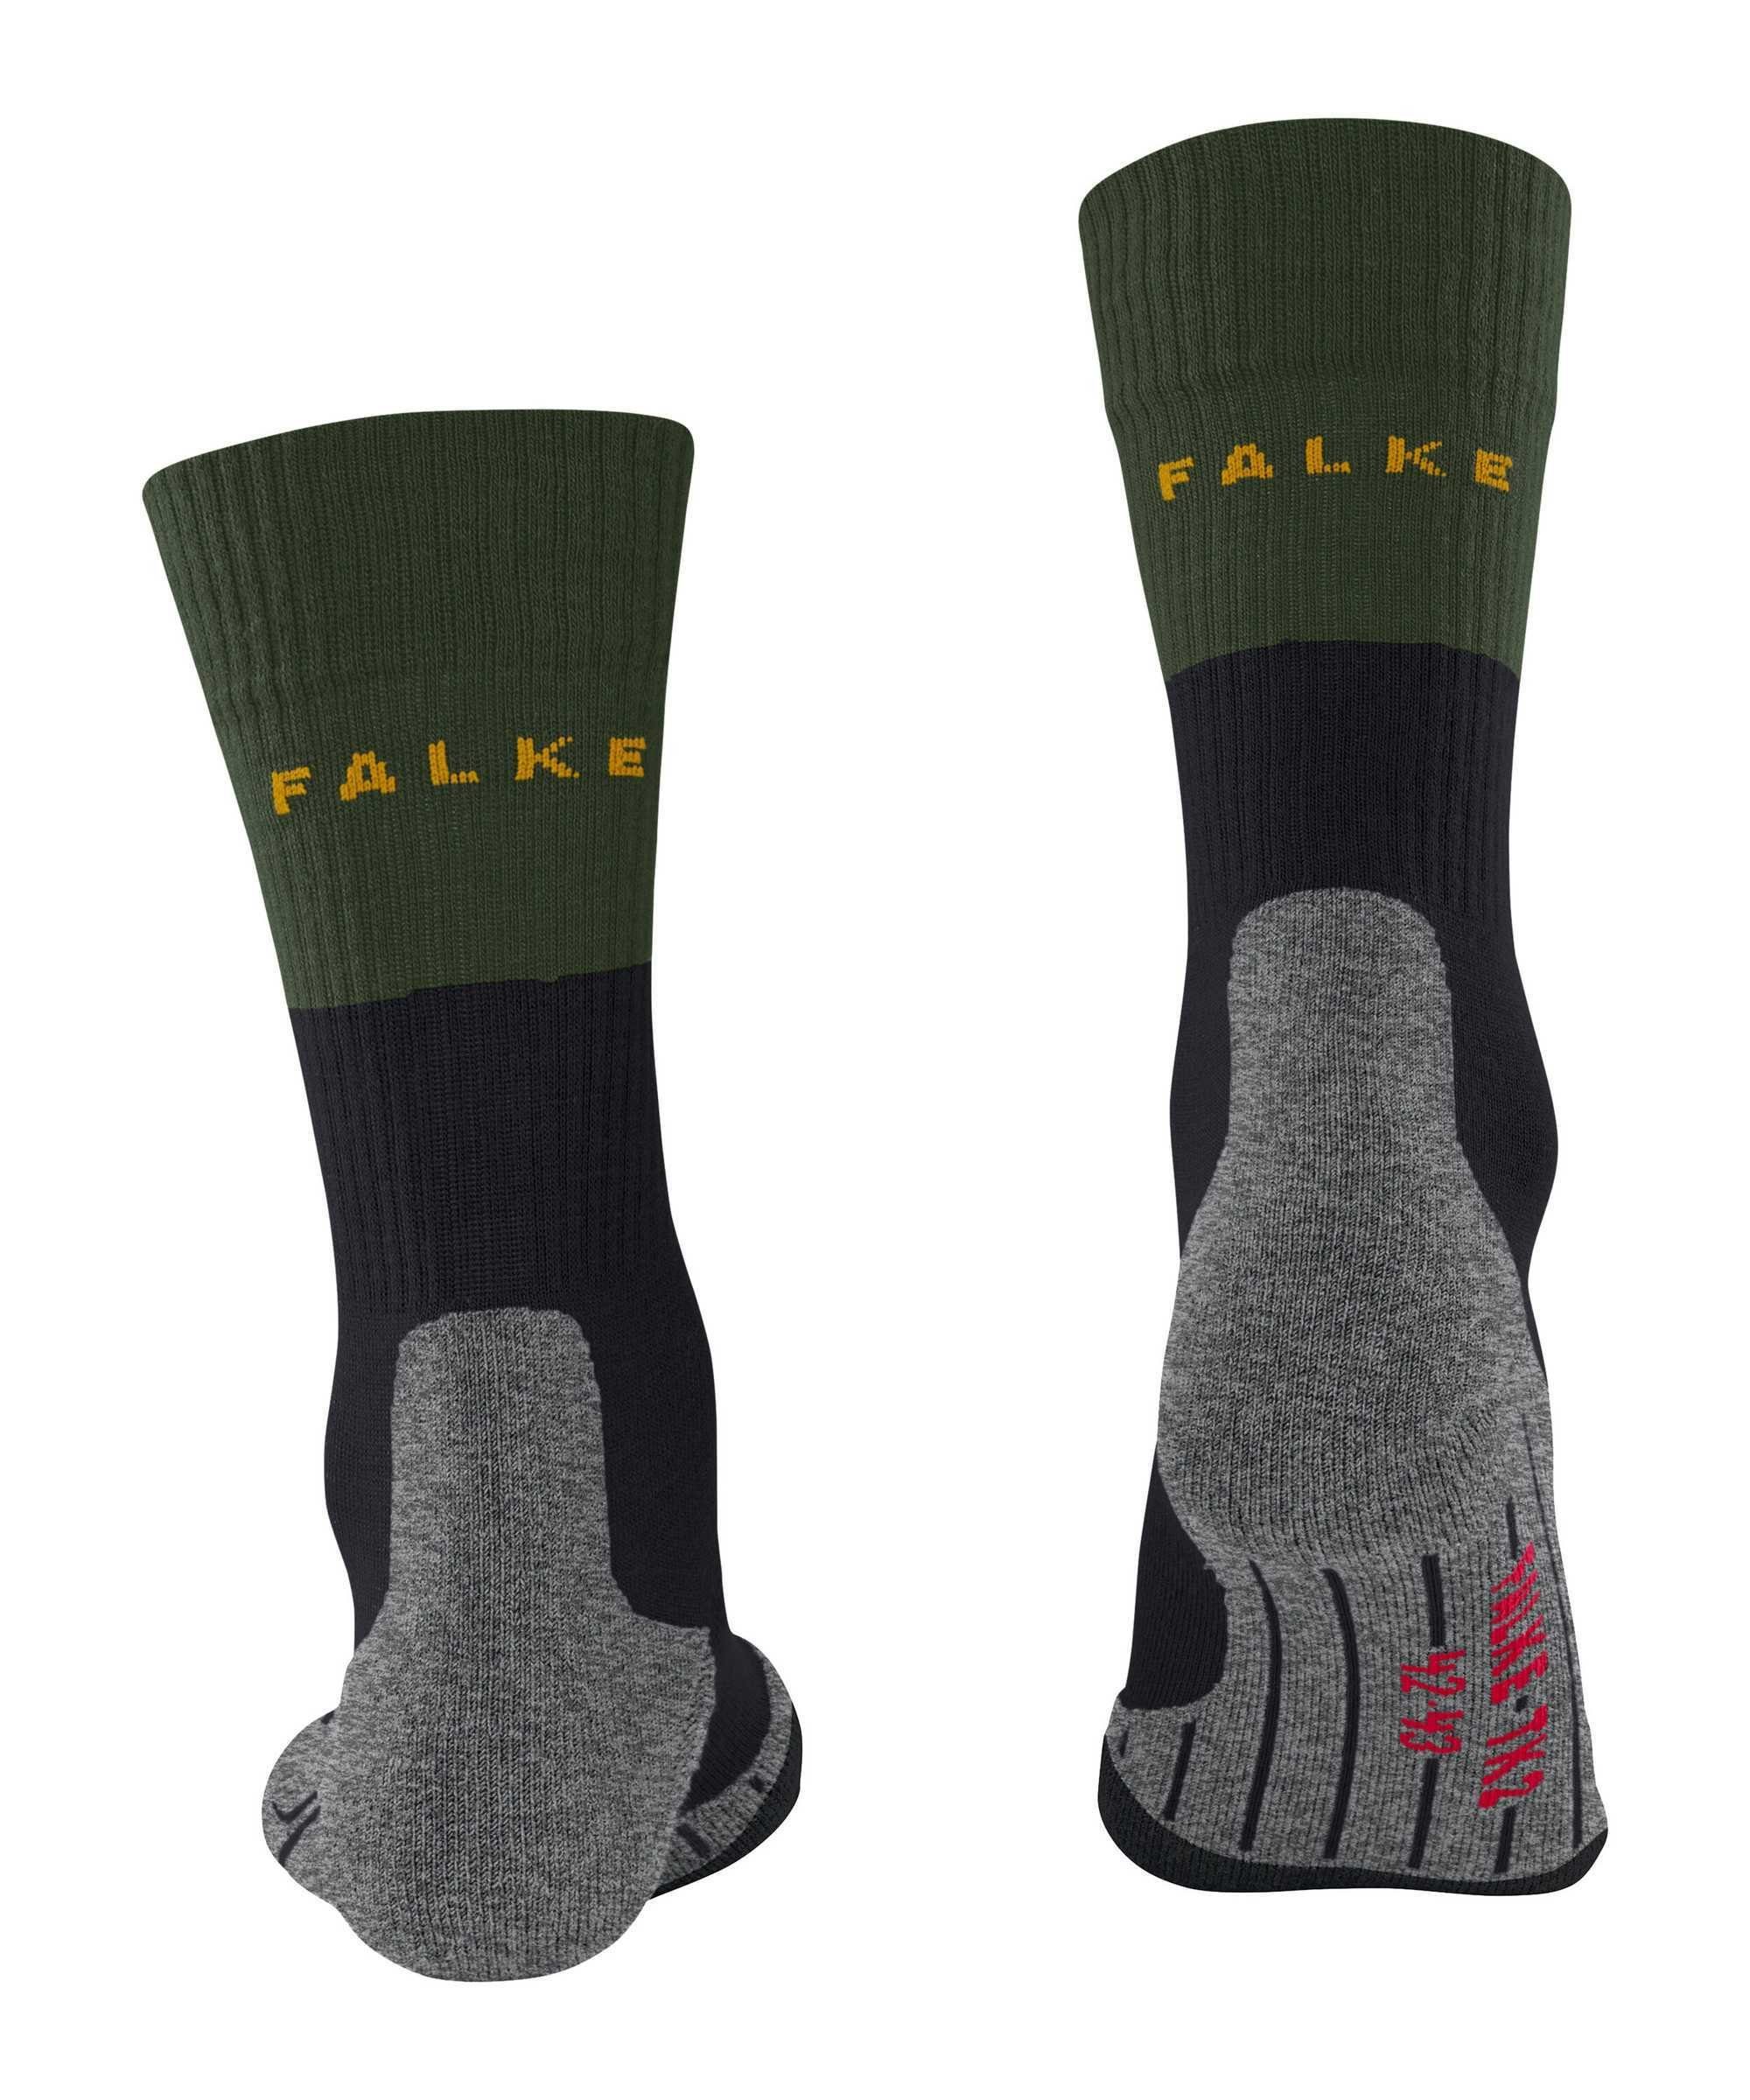 Schwarz/Grau/Grün Herren (Vertigo) Sportsocken - Trekking Socken Polsterung TK2, FALKE Socken